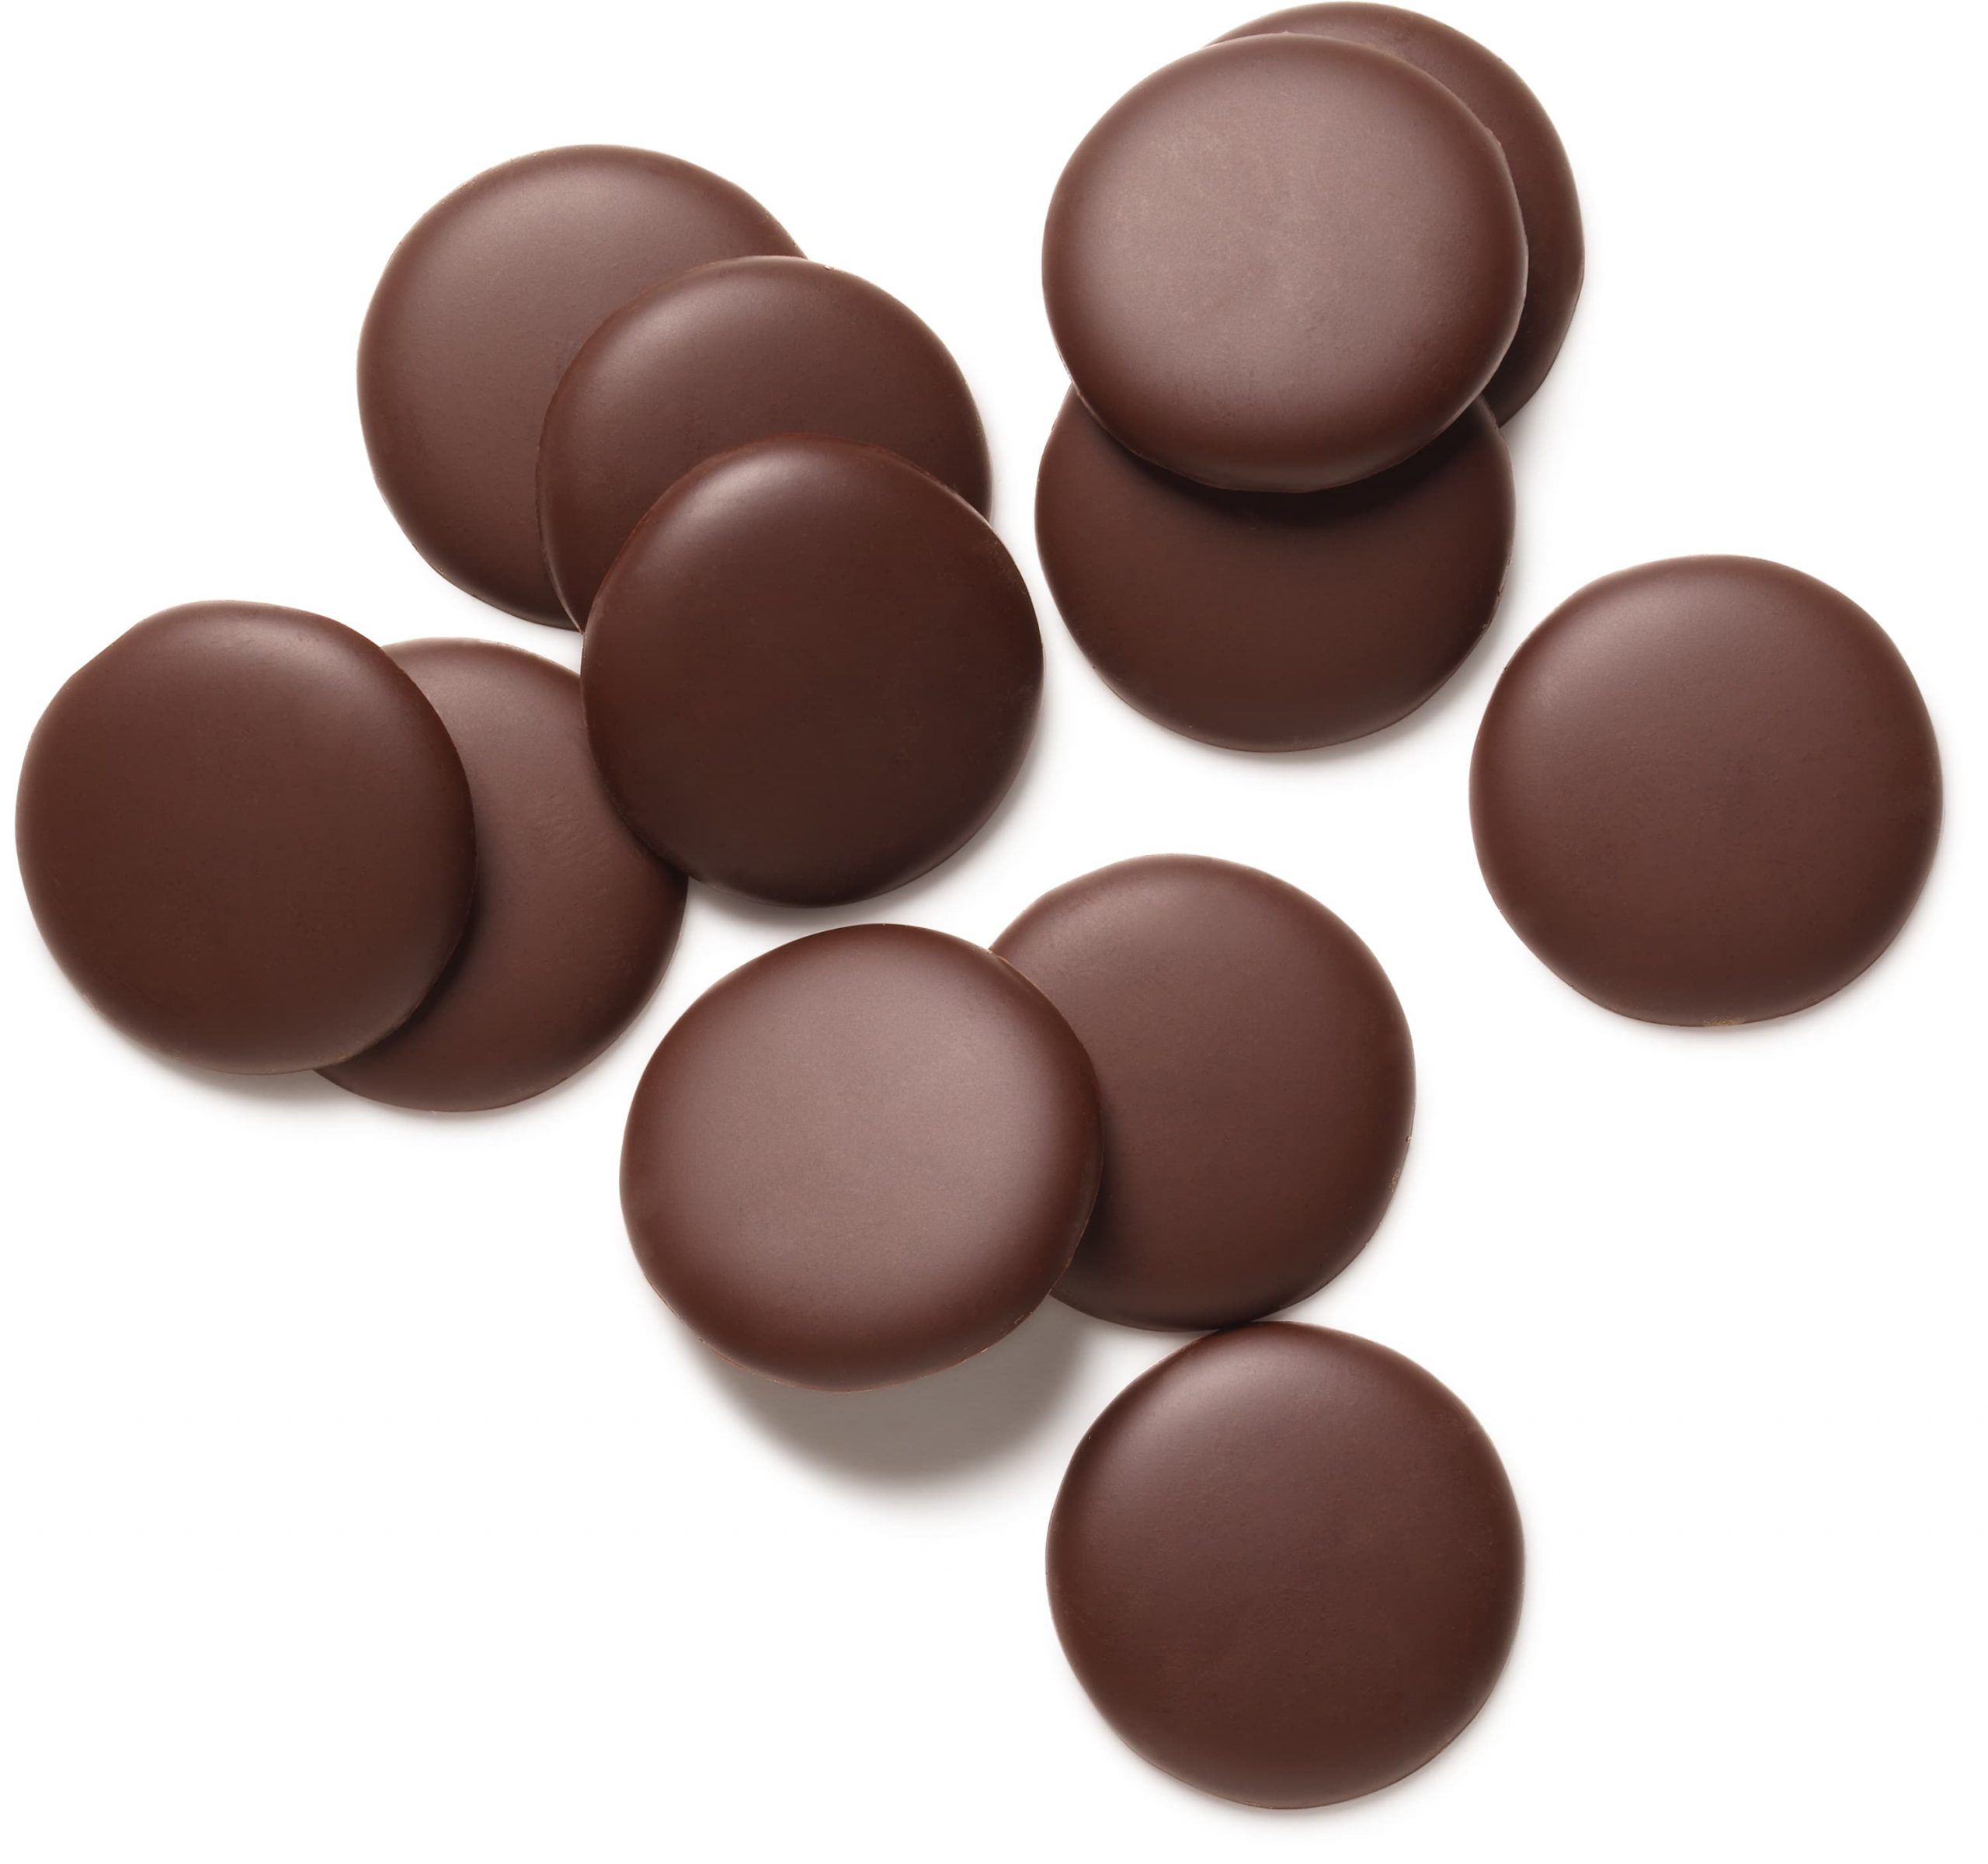 Chocolate tools — BetaCrystalsOfInsight — Voila Chocolat